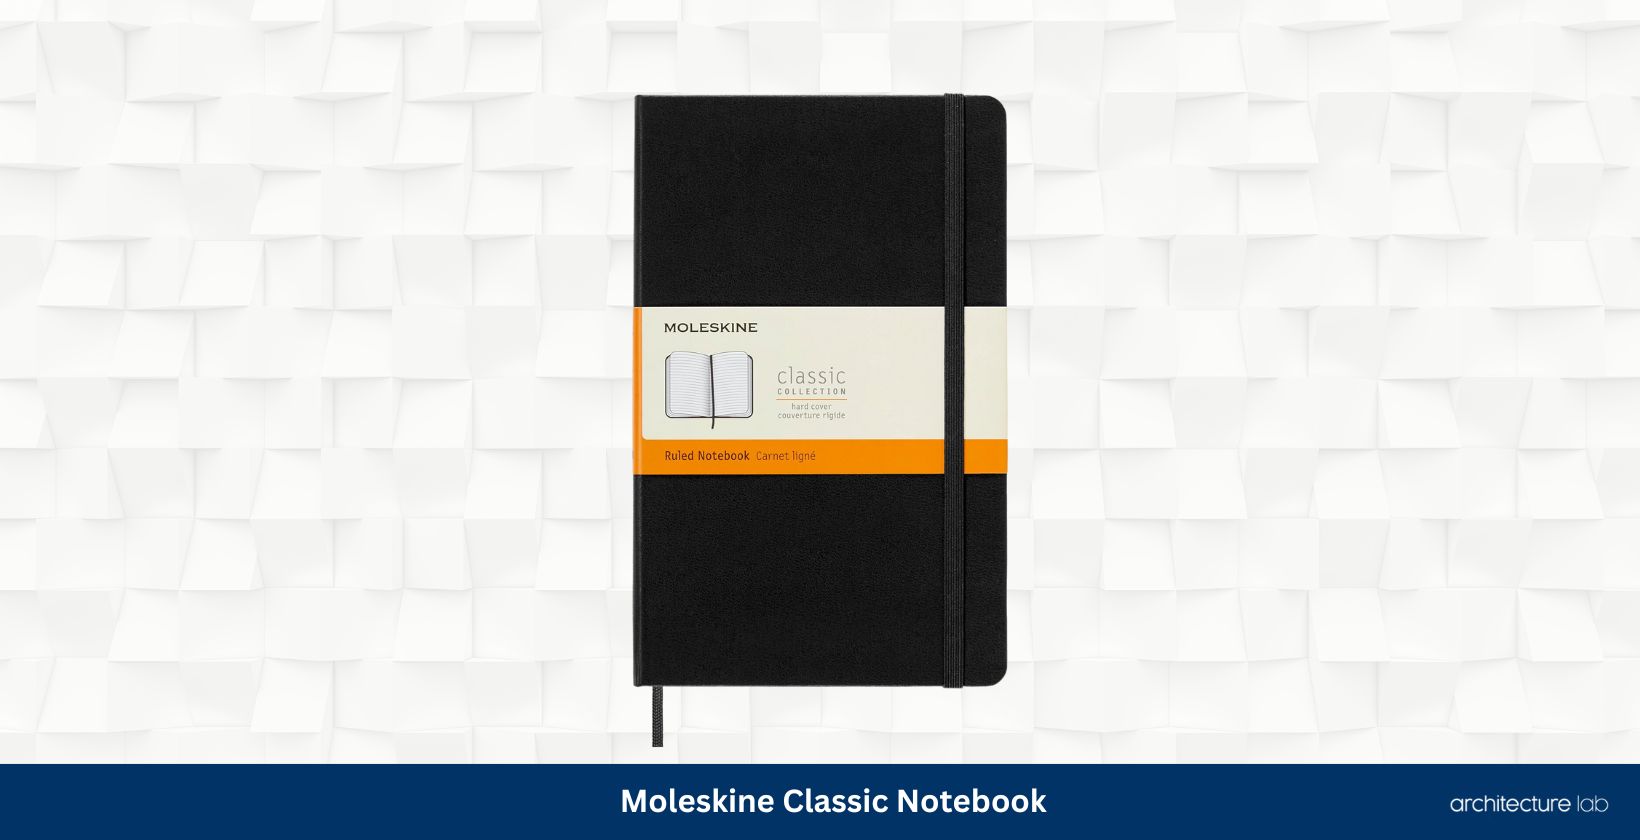 Moleskine classic notebook